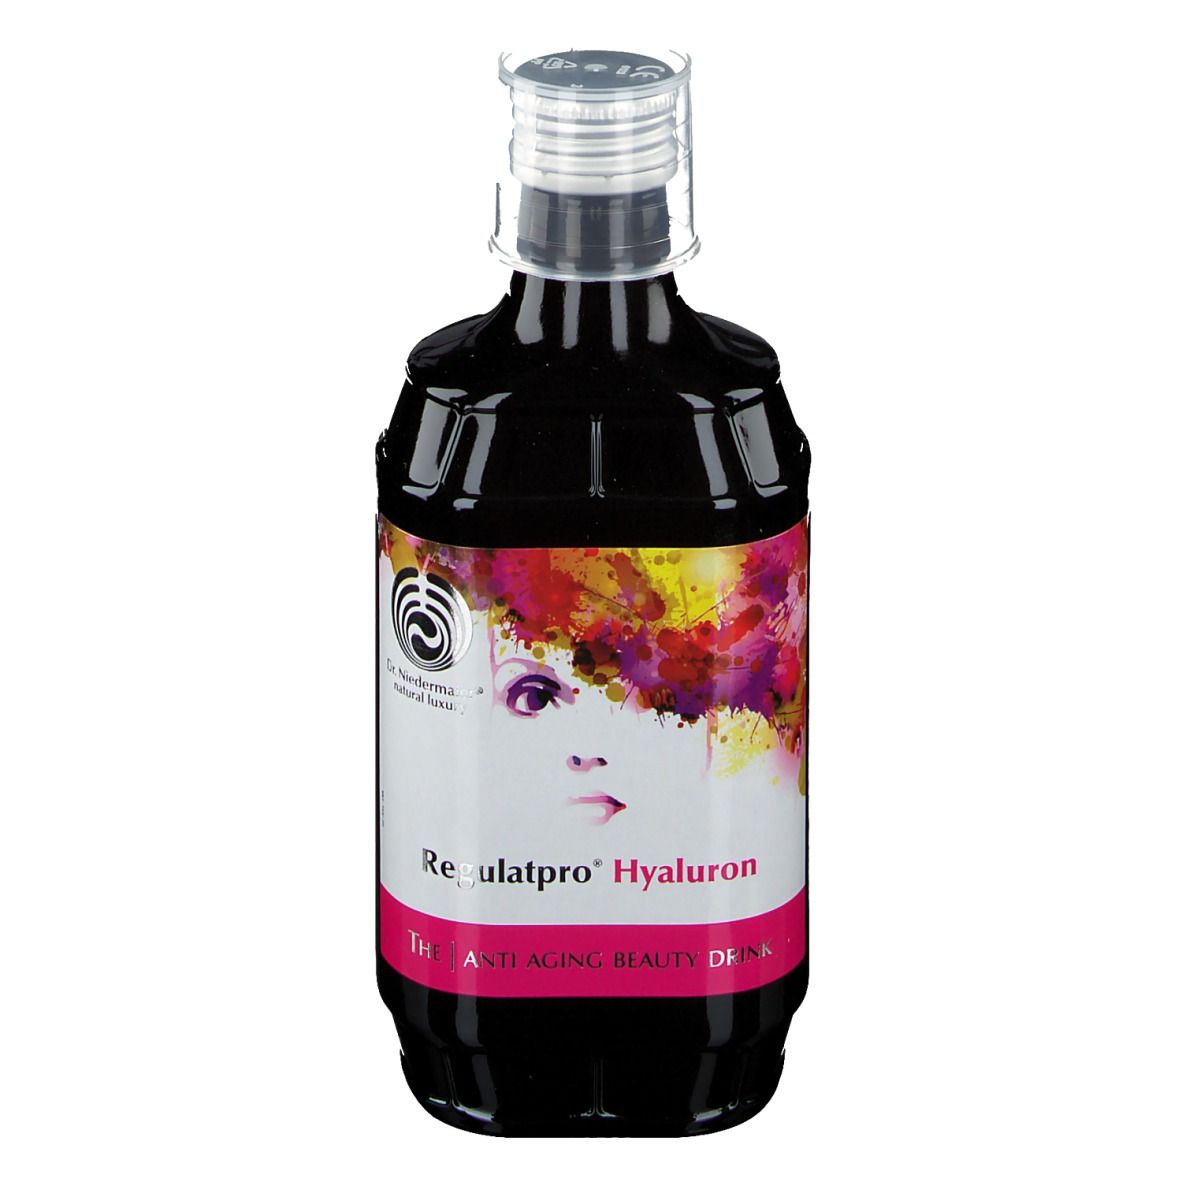 Image of Regulatpro® Hyaluron Anti Aging Beauty Drink